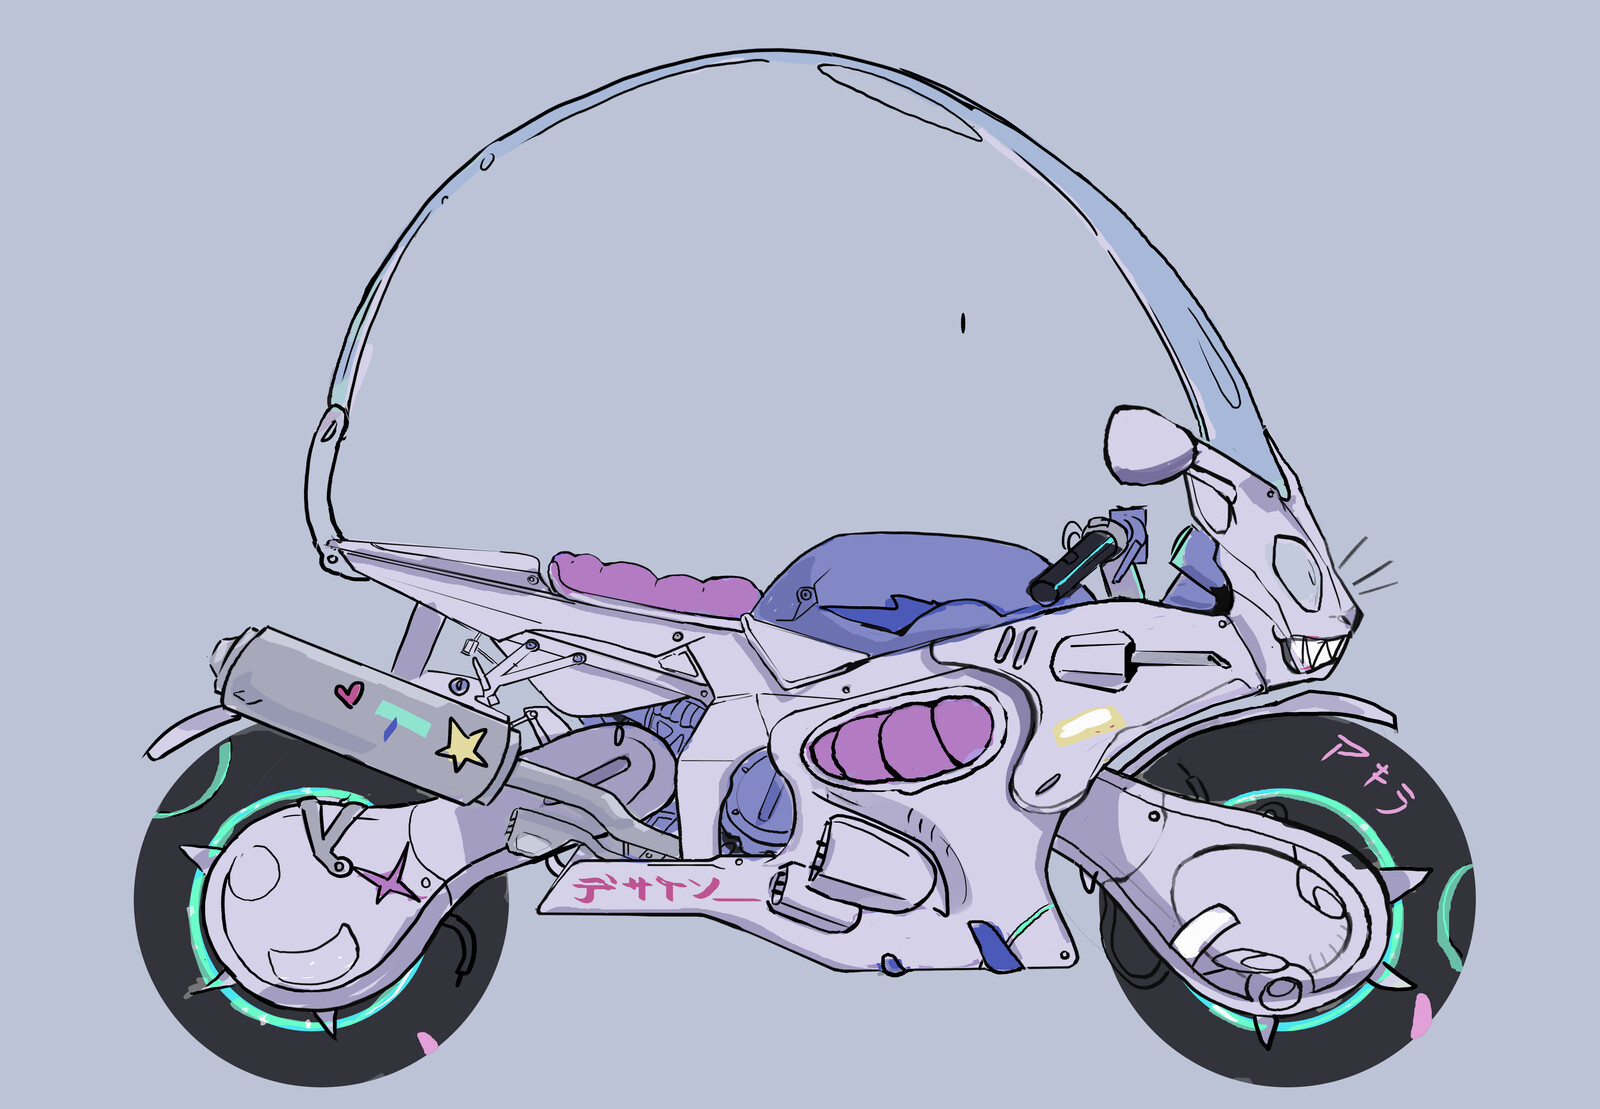 Motorcycle rough sketch